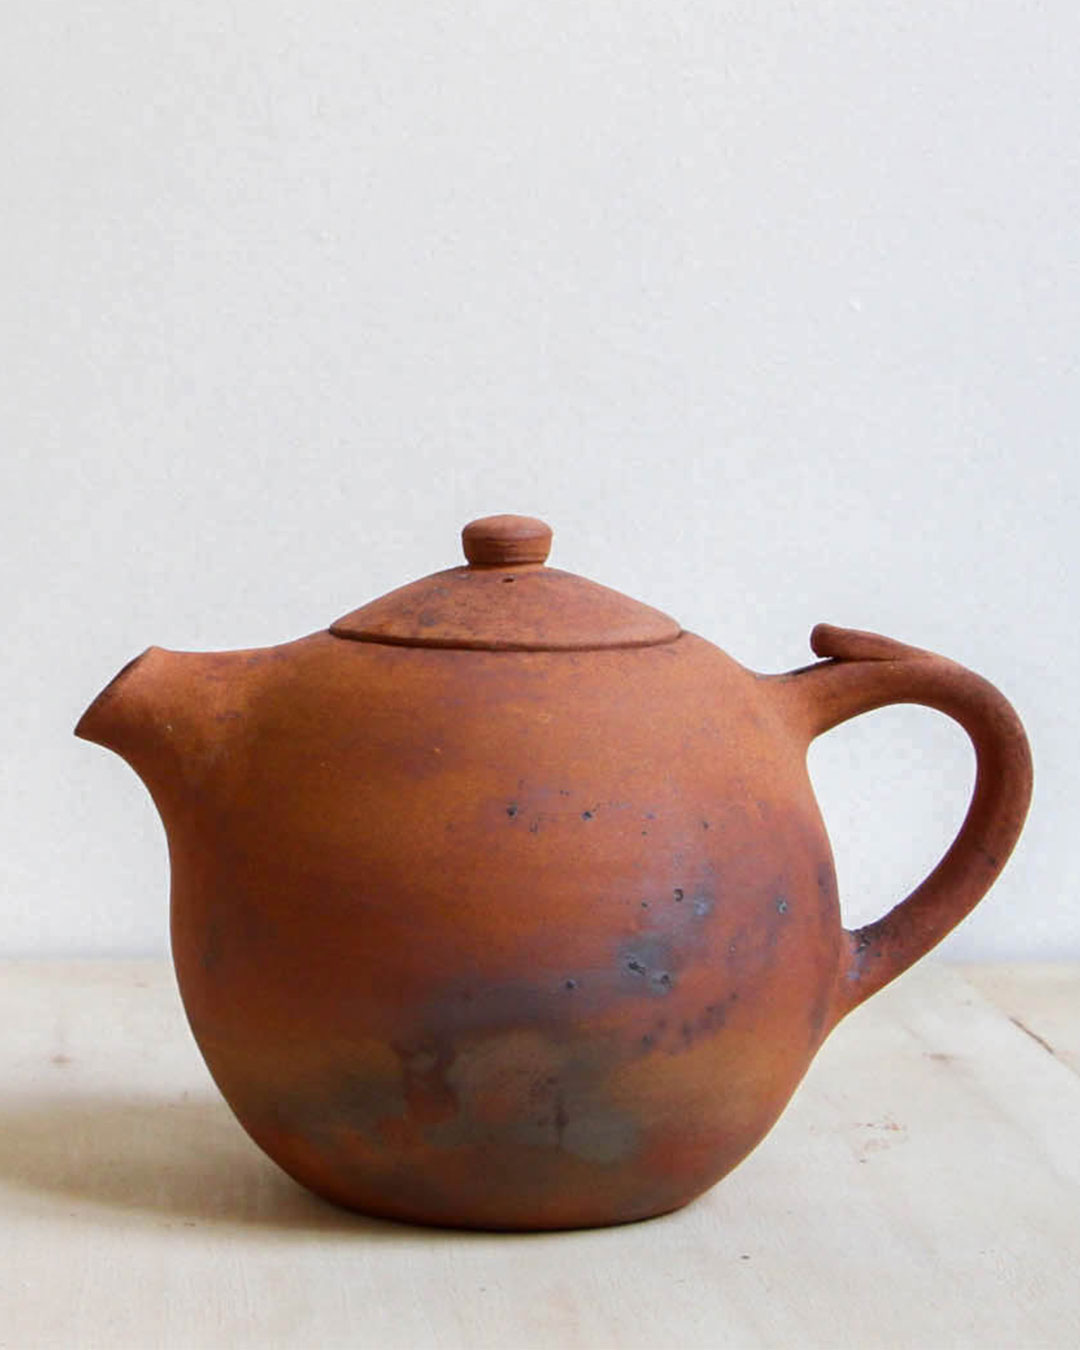 Smocky Tea Pot - Clementine Causse